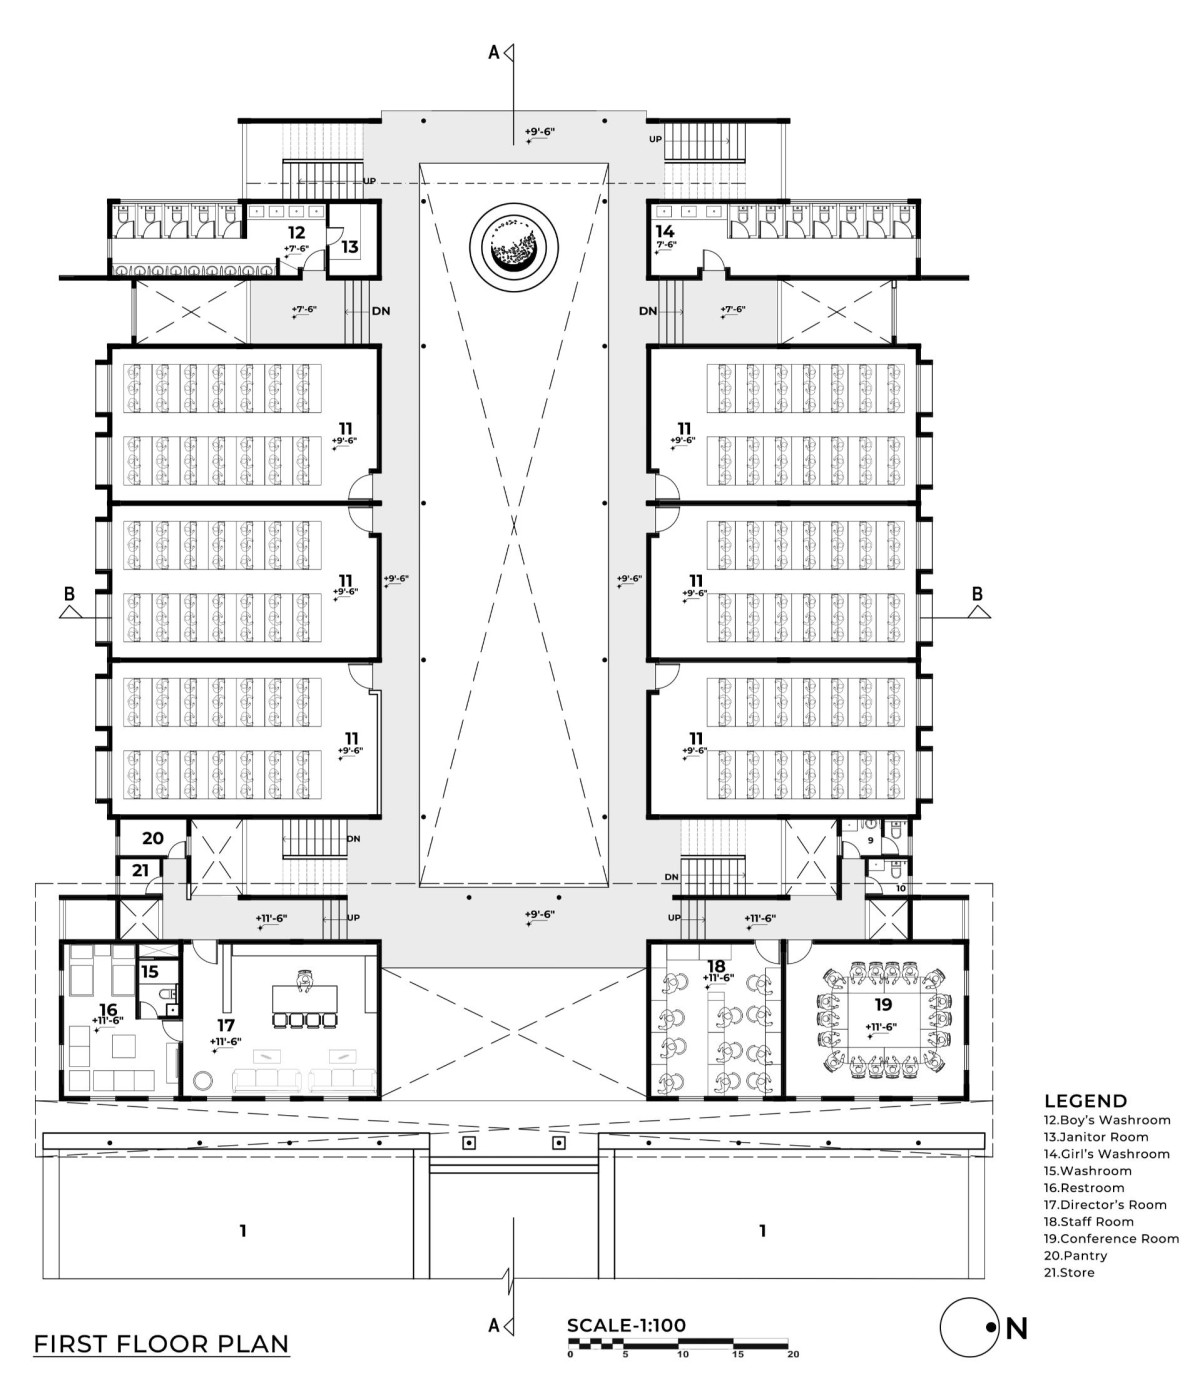 First Floor Plan of Vidyakula International School by Sudaiva Studio